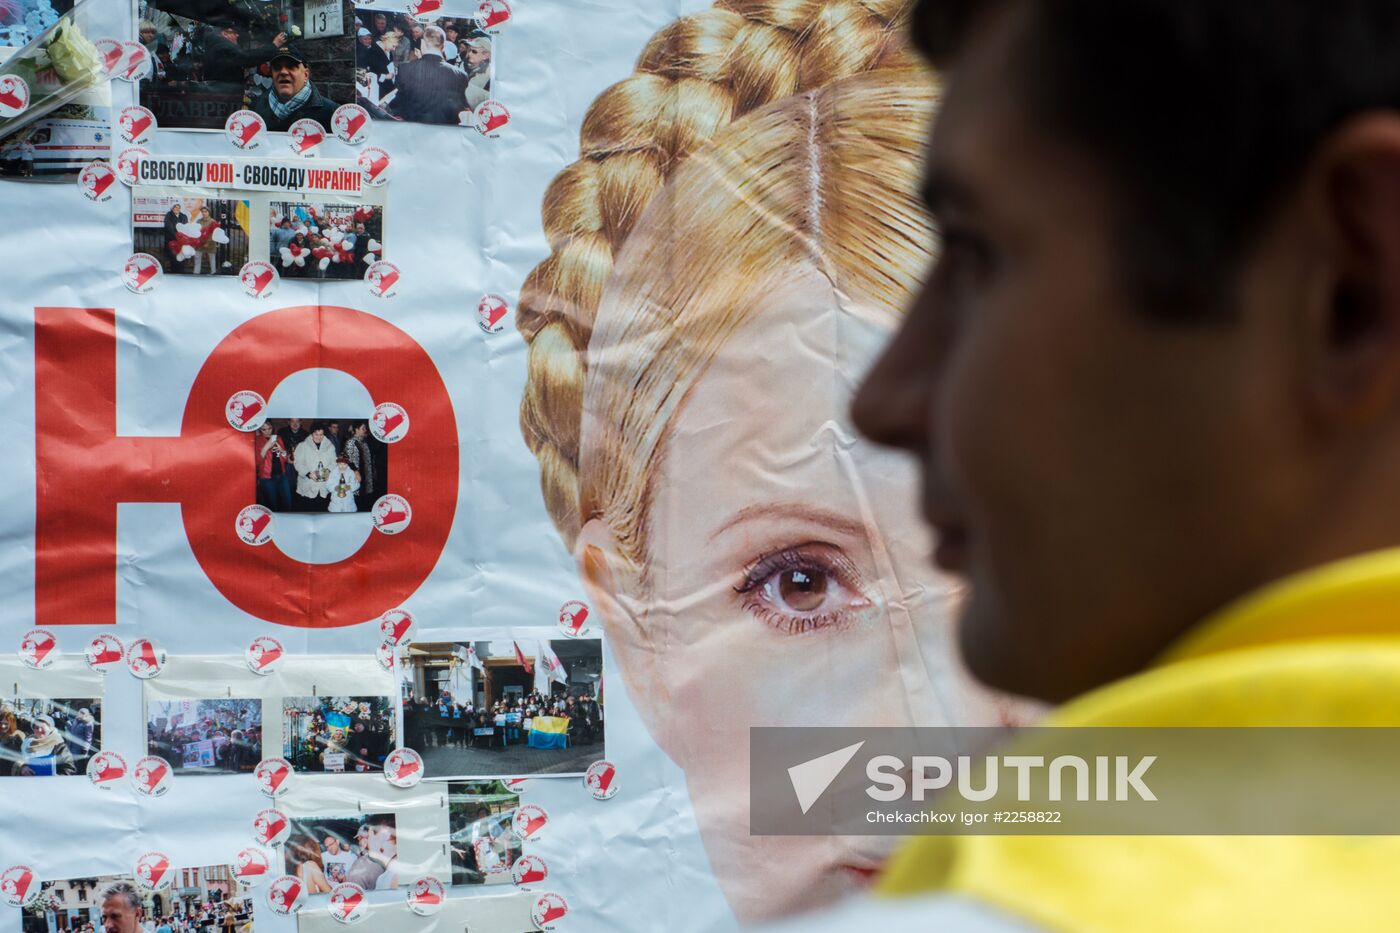 August 5th marks 2nd anniversary of Yulia Tymoshenko's arrest